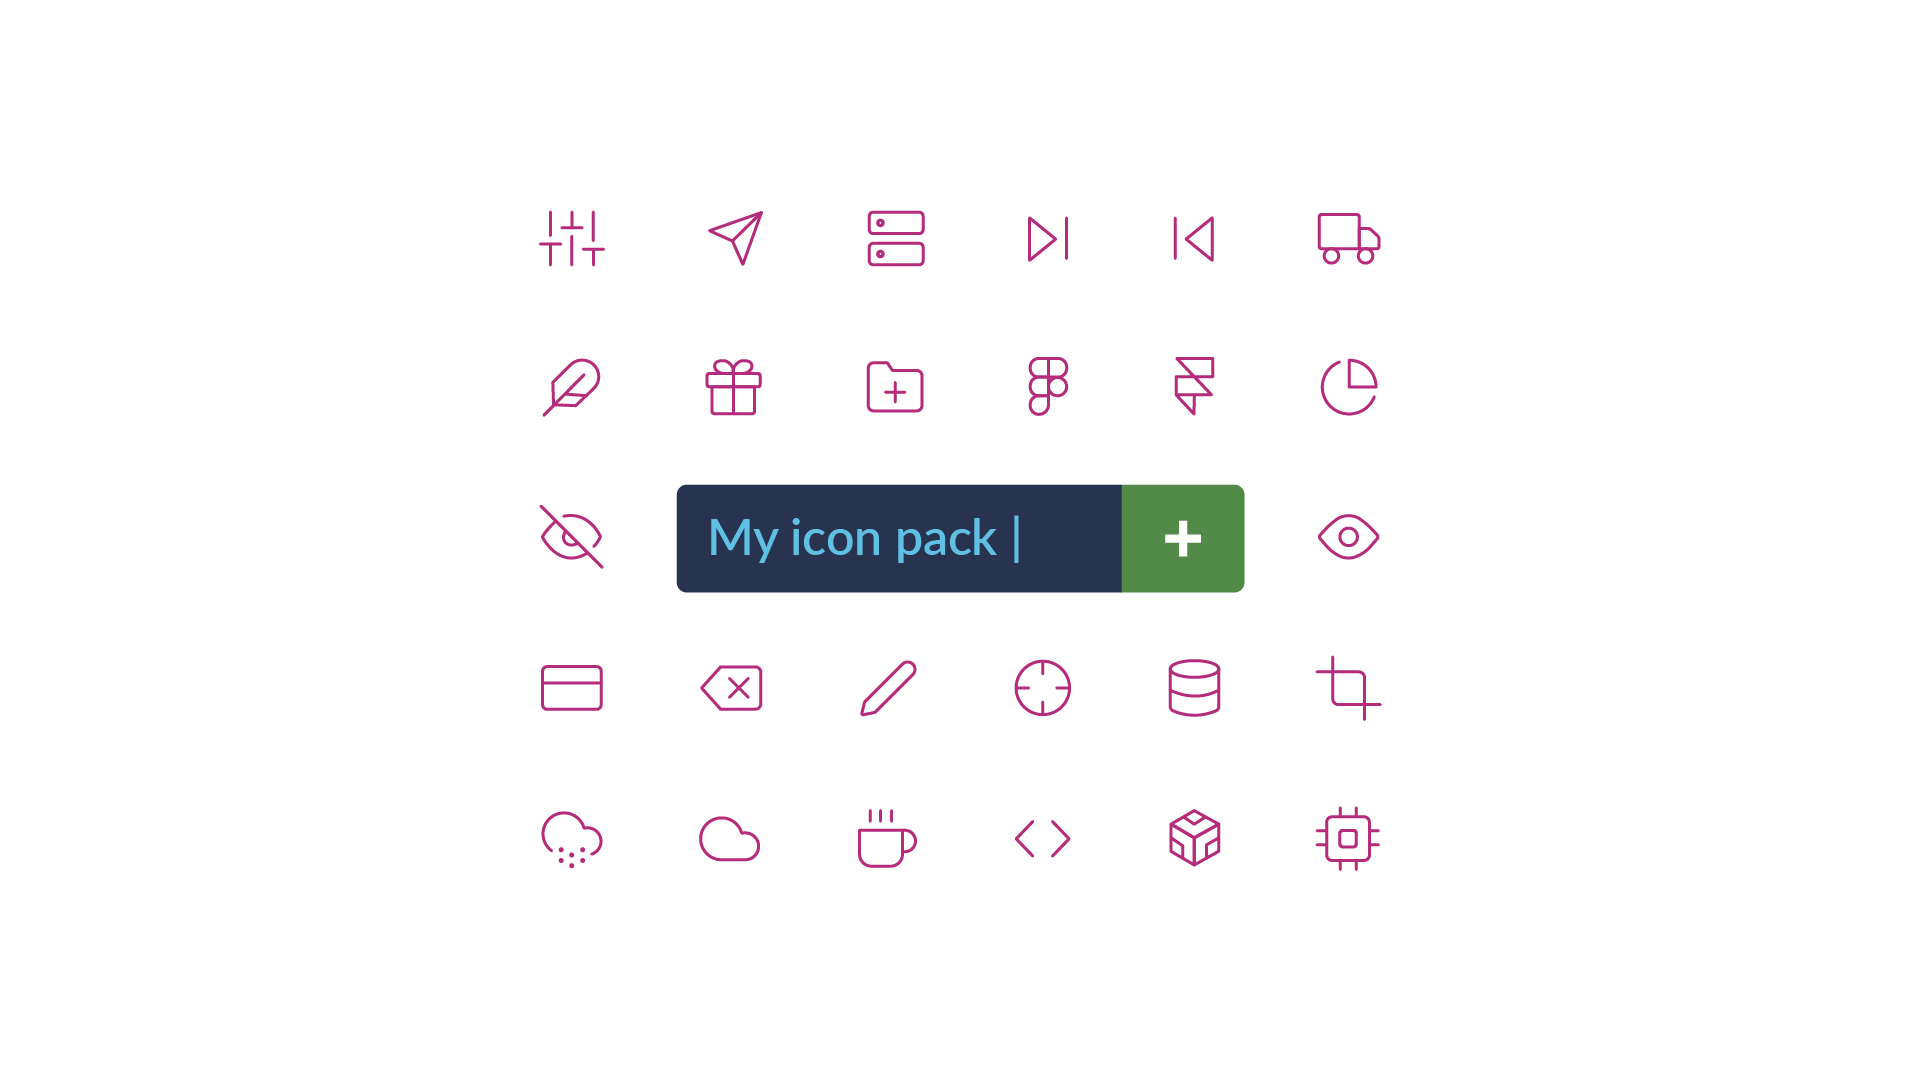 Icon packs